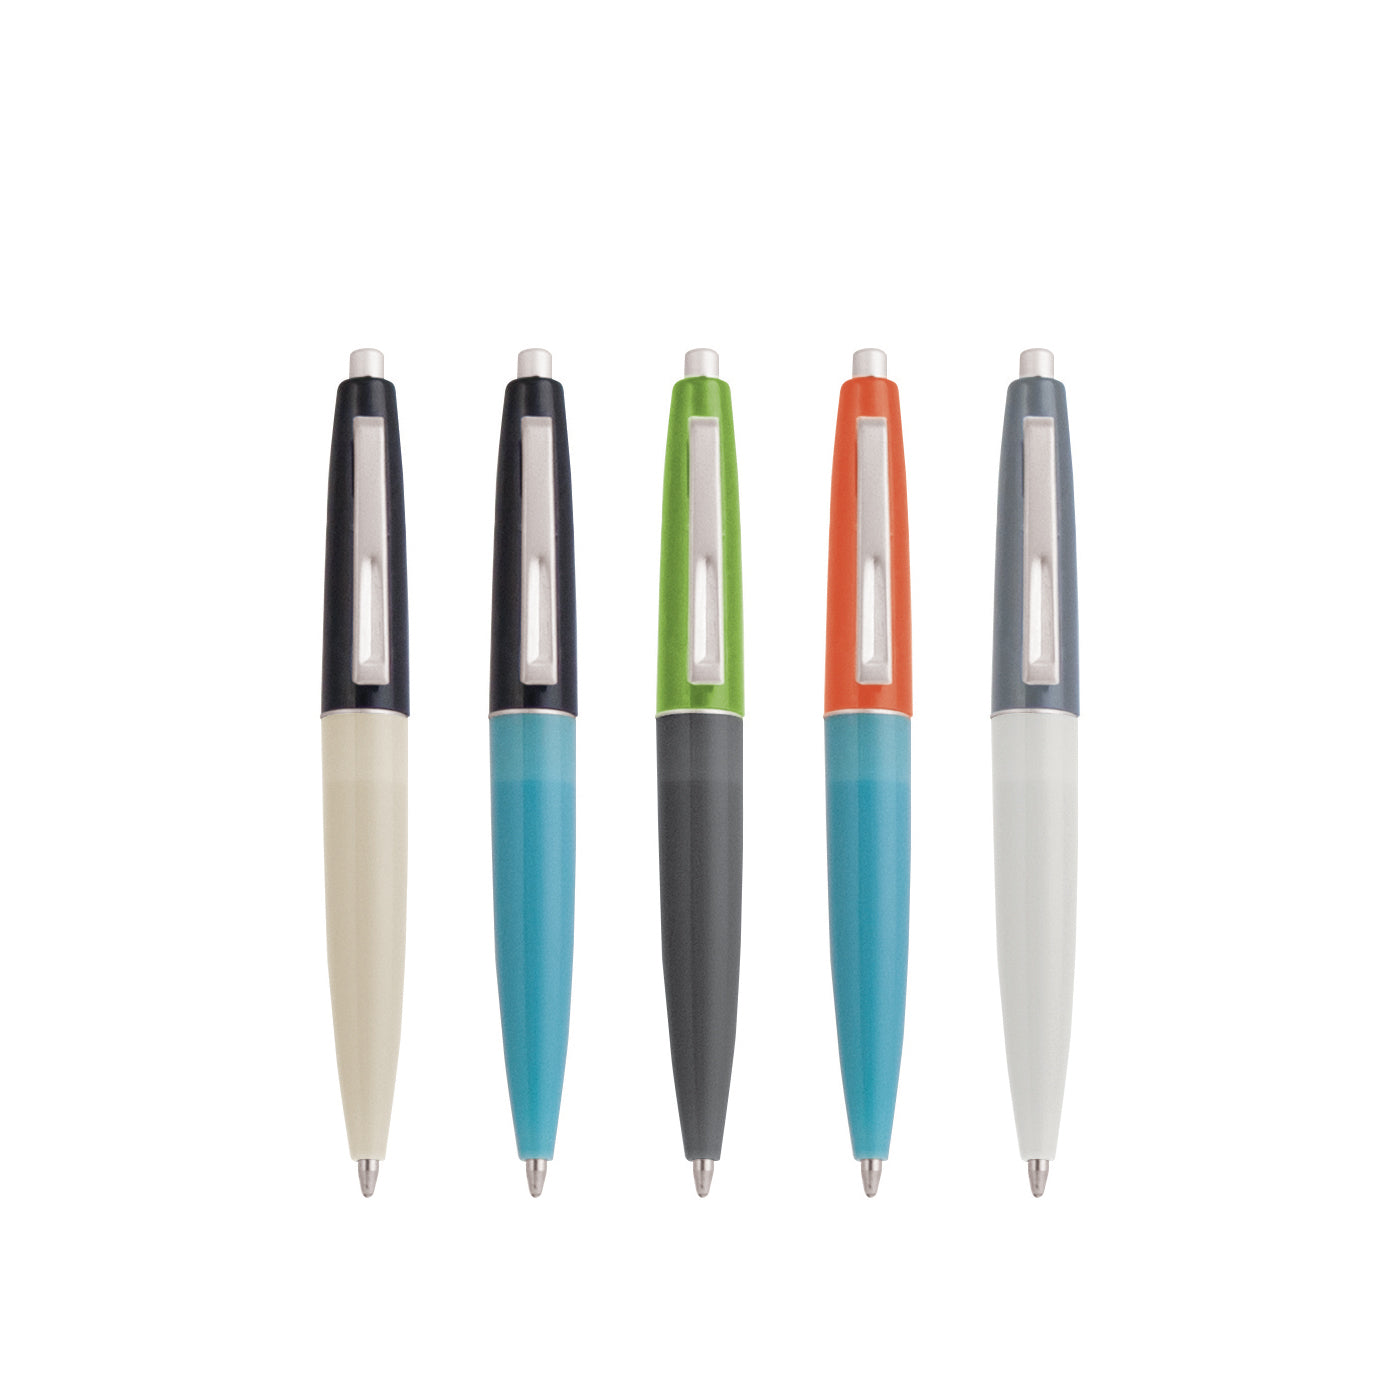 Two color pens